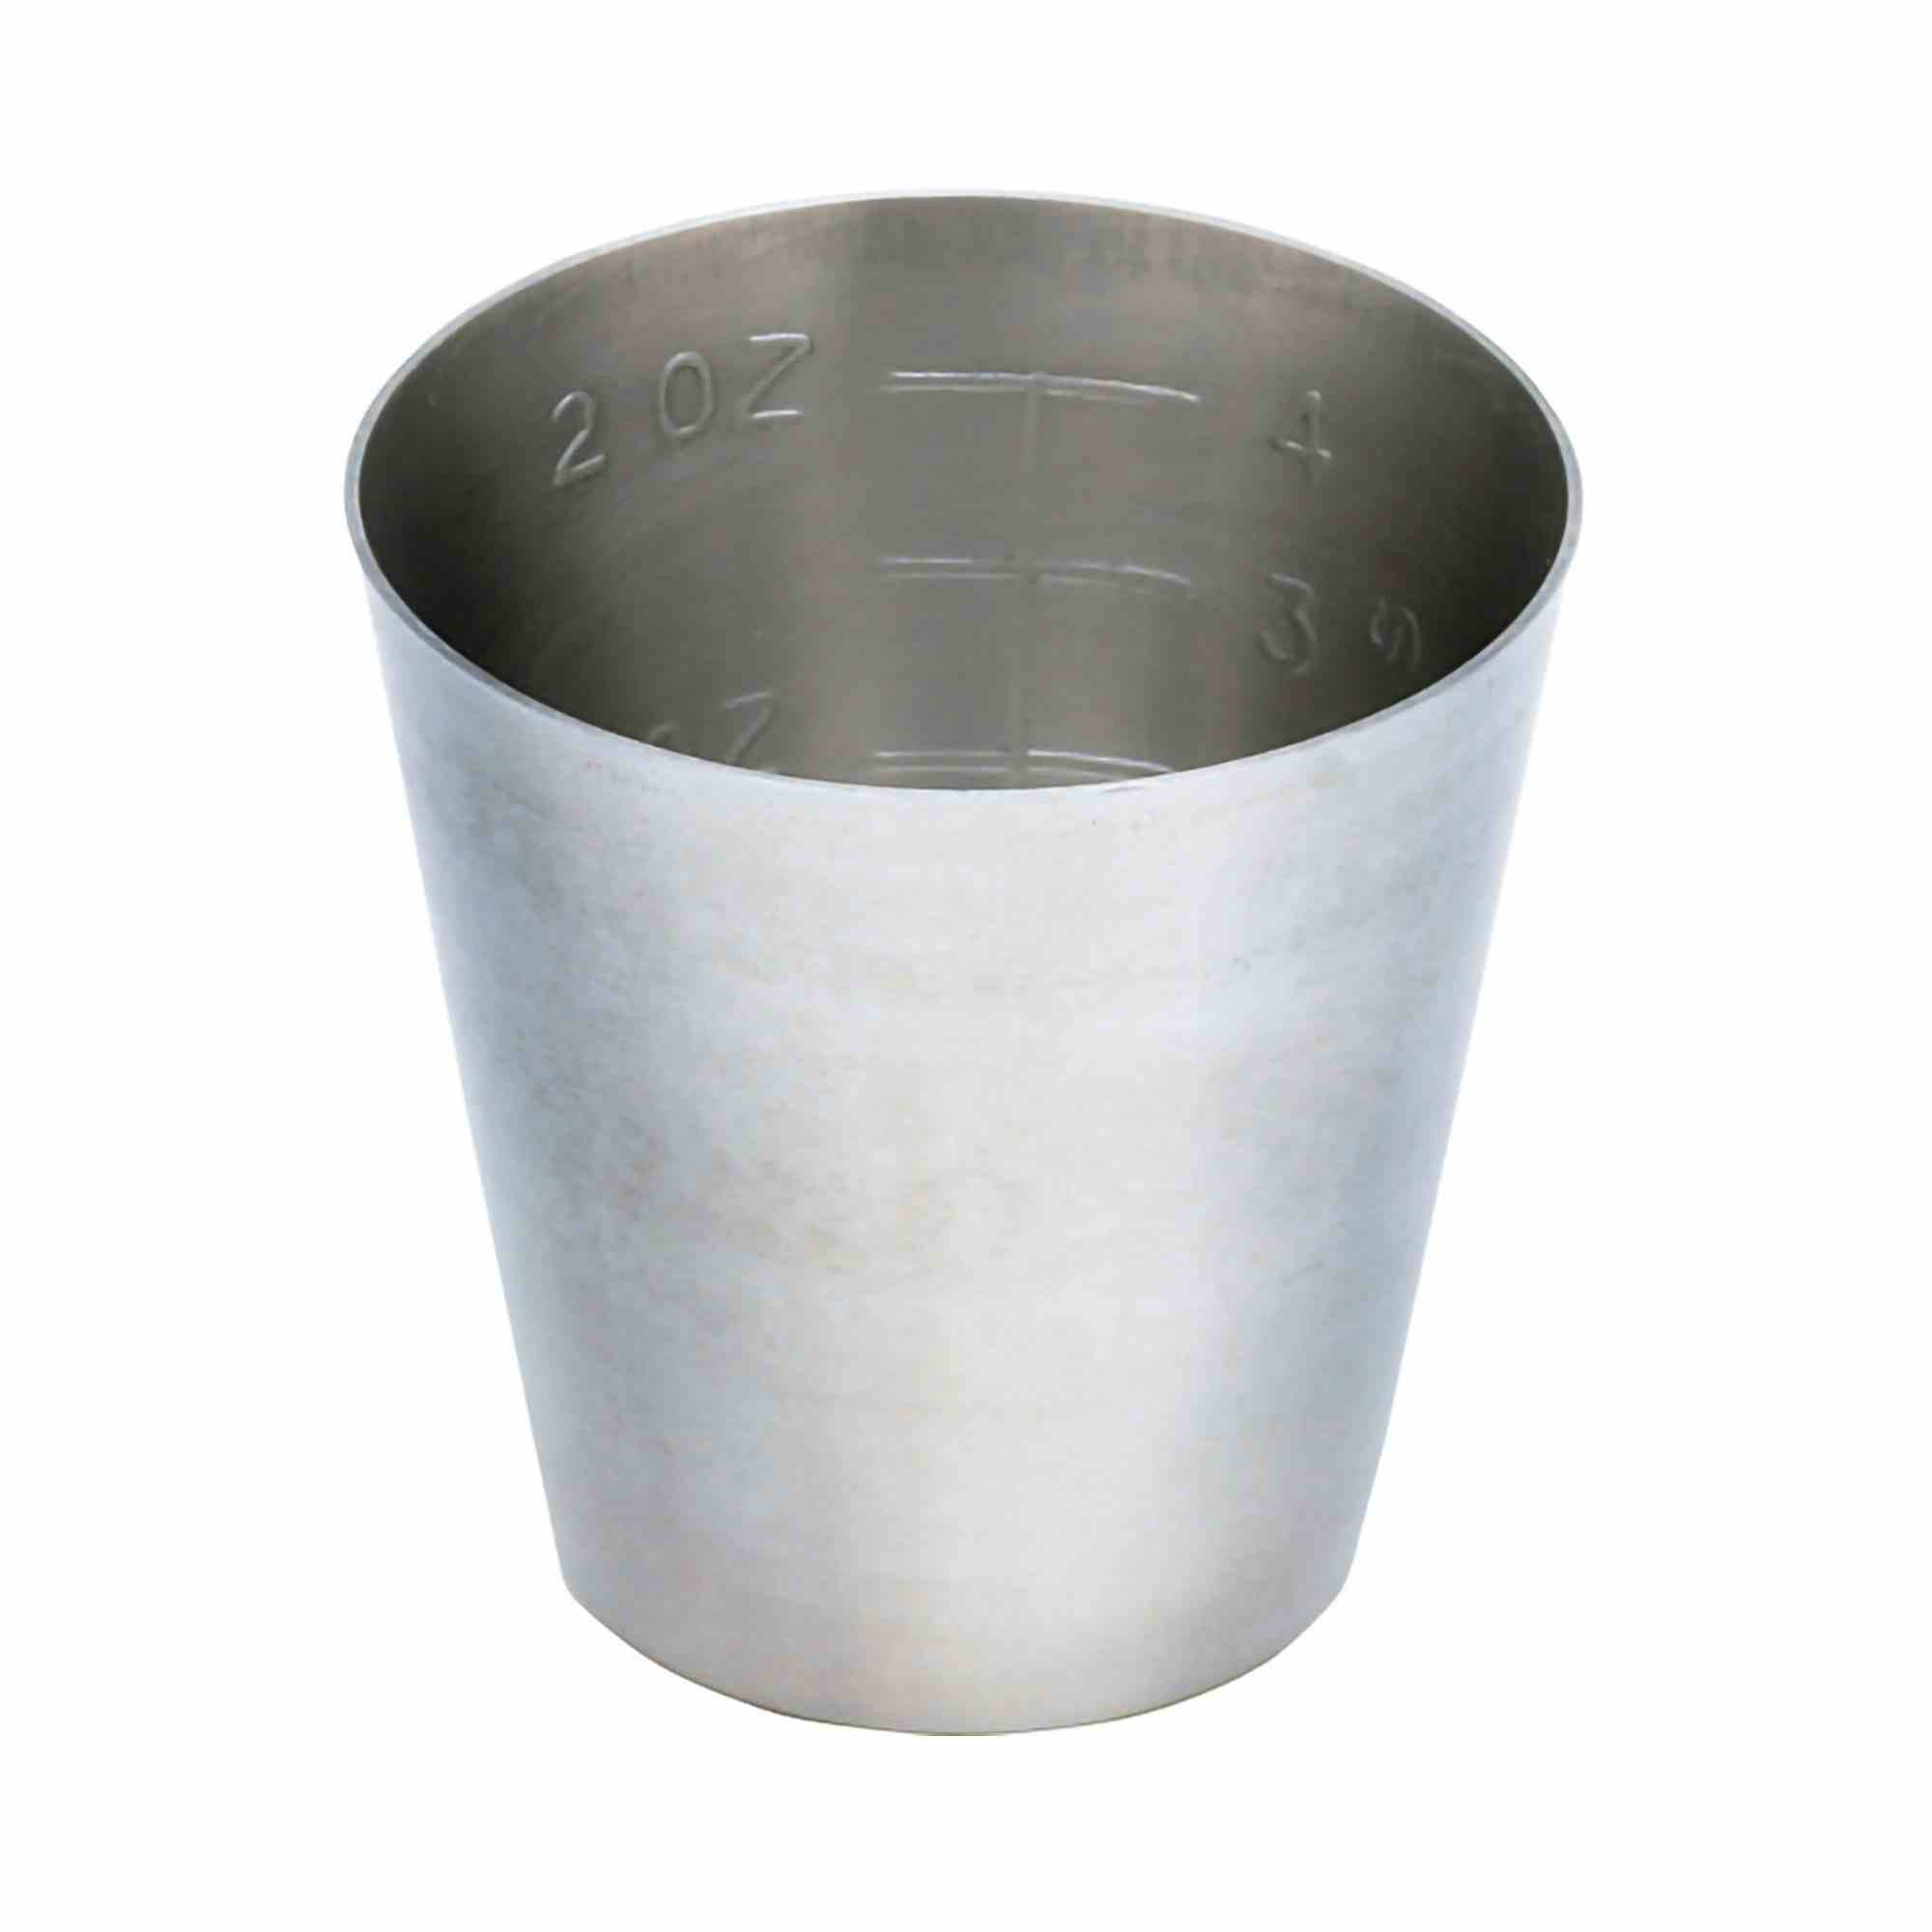 McKesson Argent Medicine Cup, 2oz., Stainless Steel, Reusable, 43-1-015, 1 Each